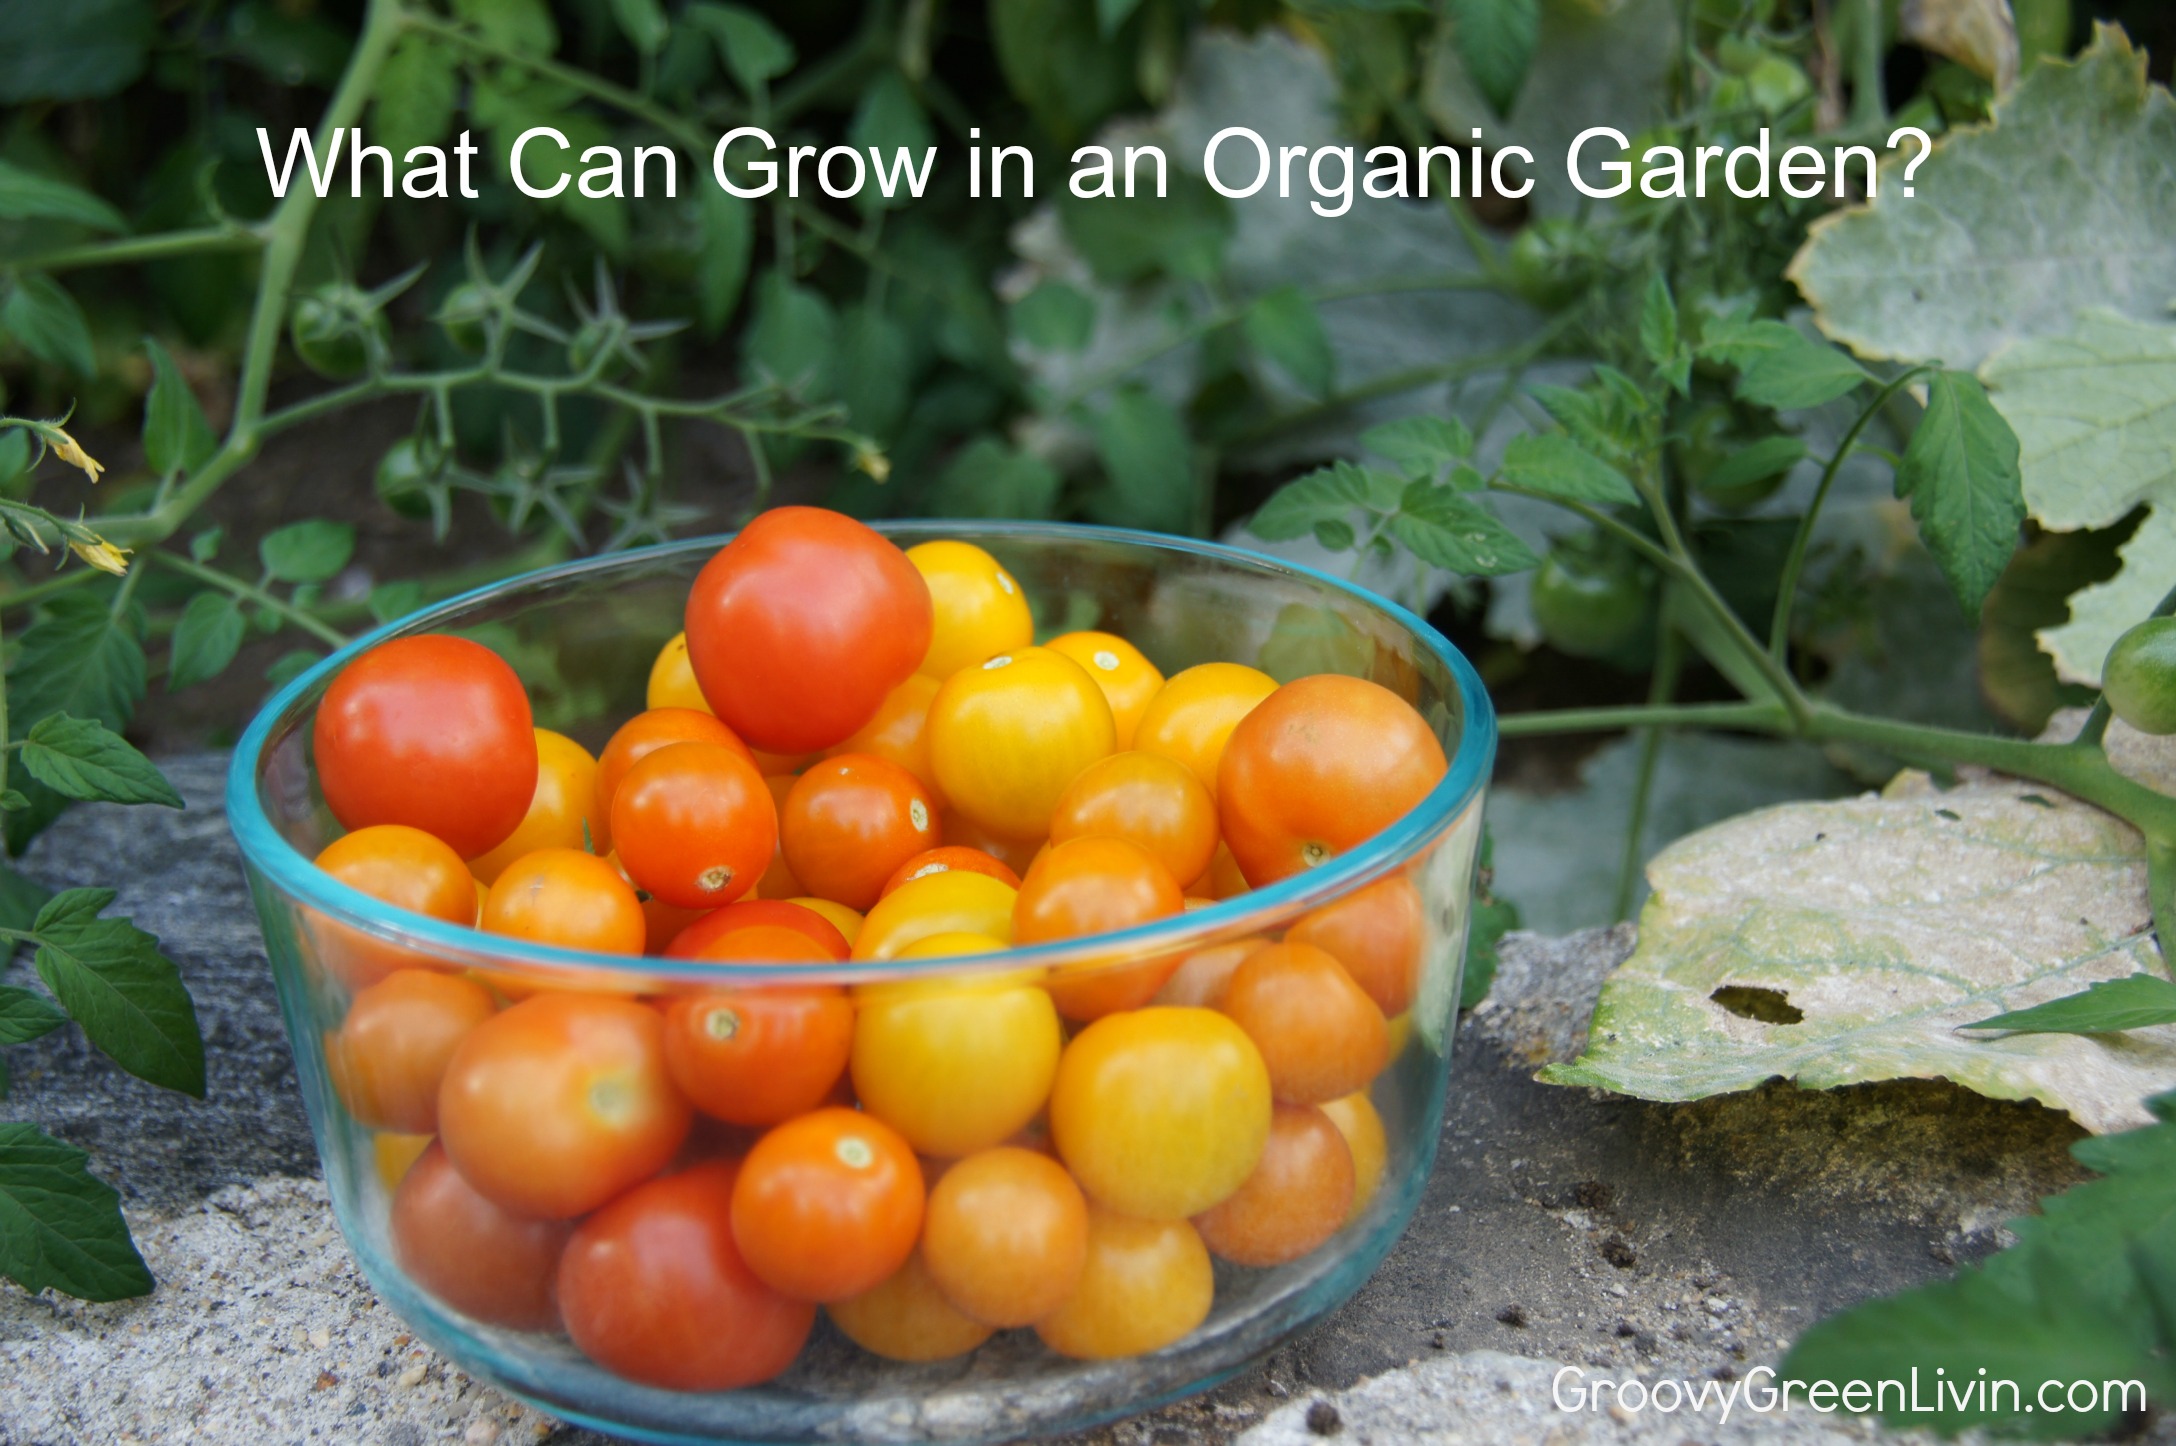 What Can Grow in an Organic Garden?